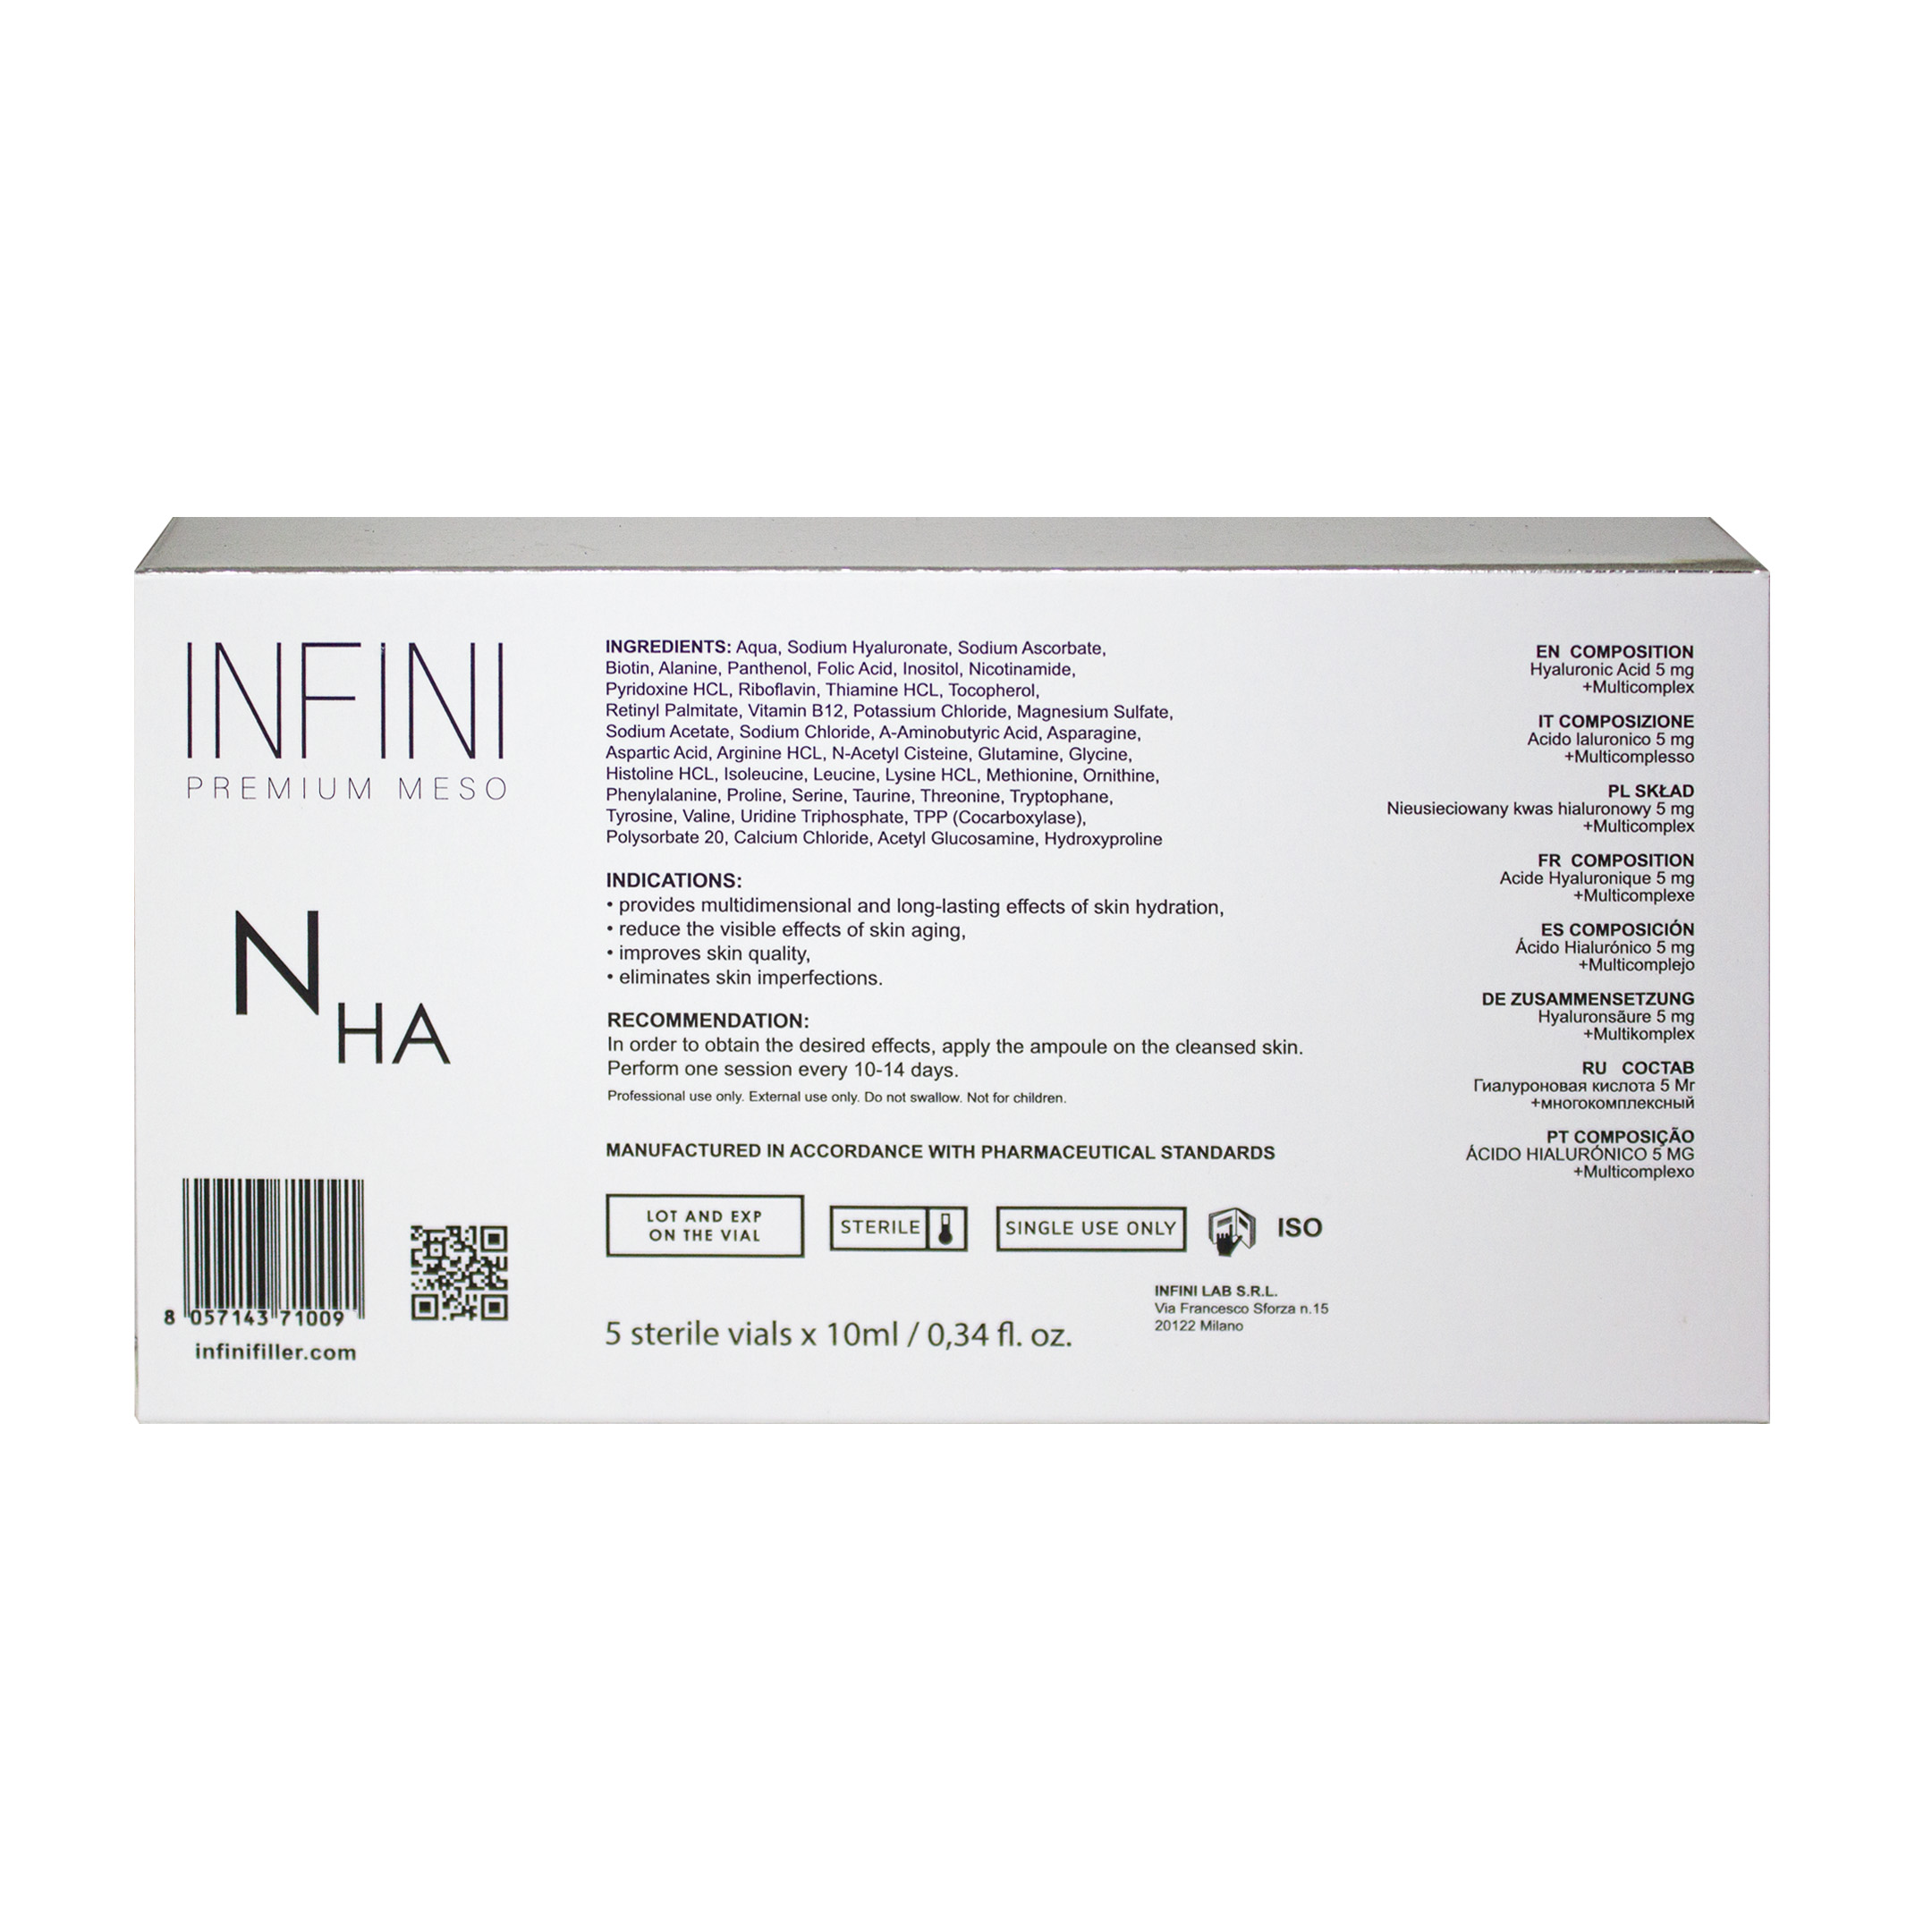 Infini Premium Meso NHA back